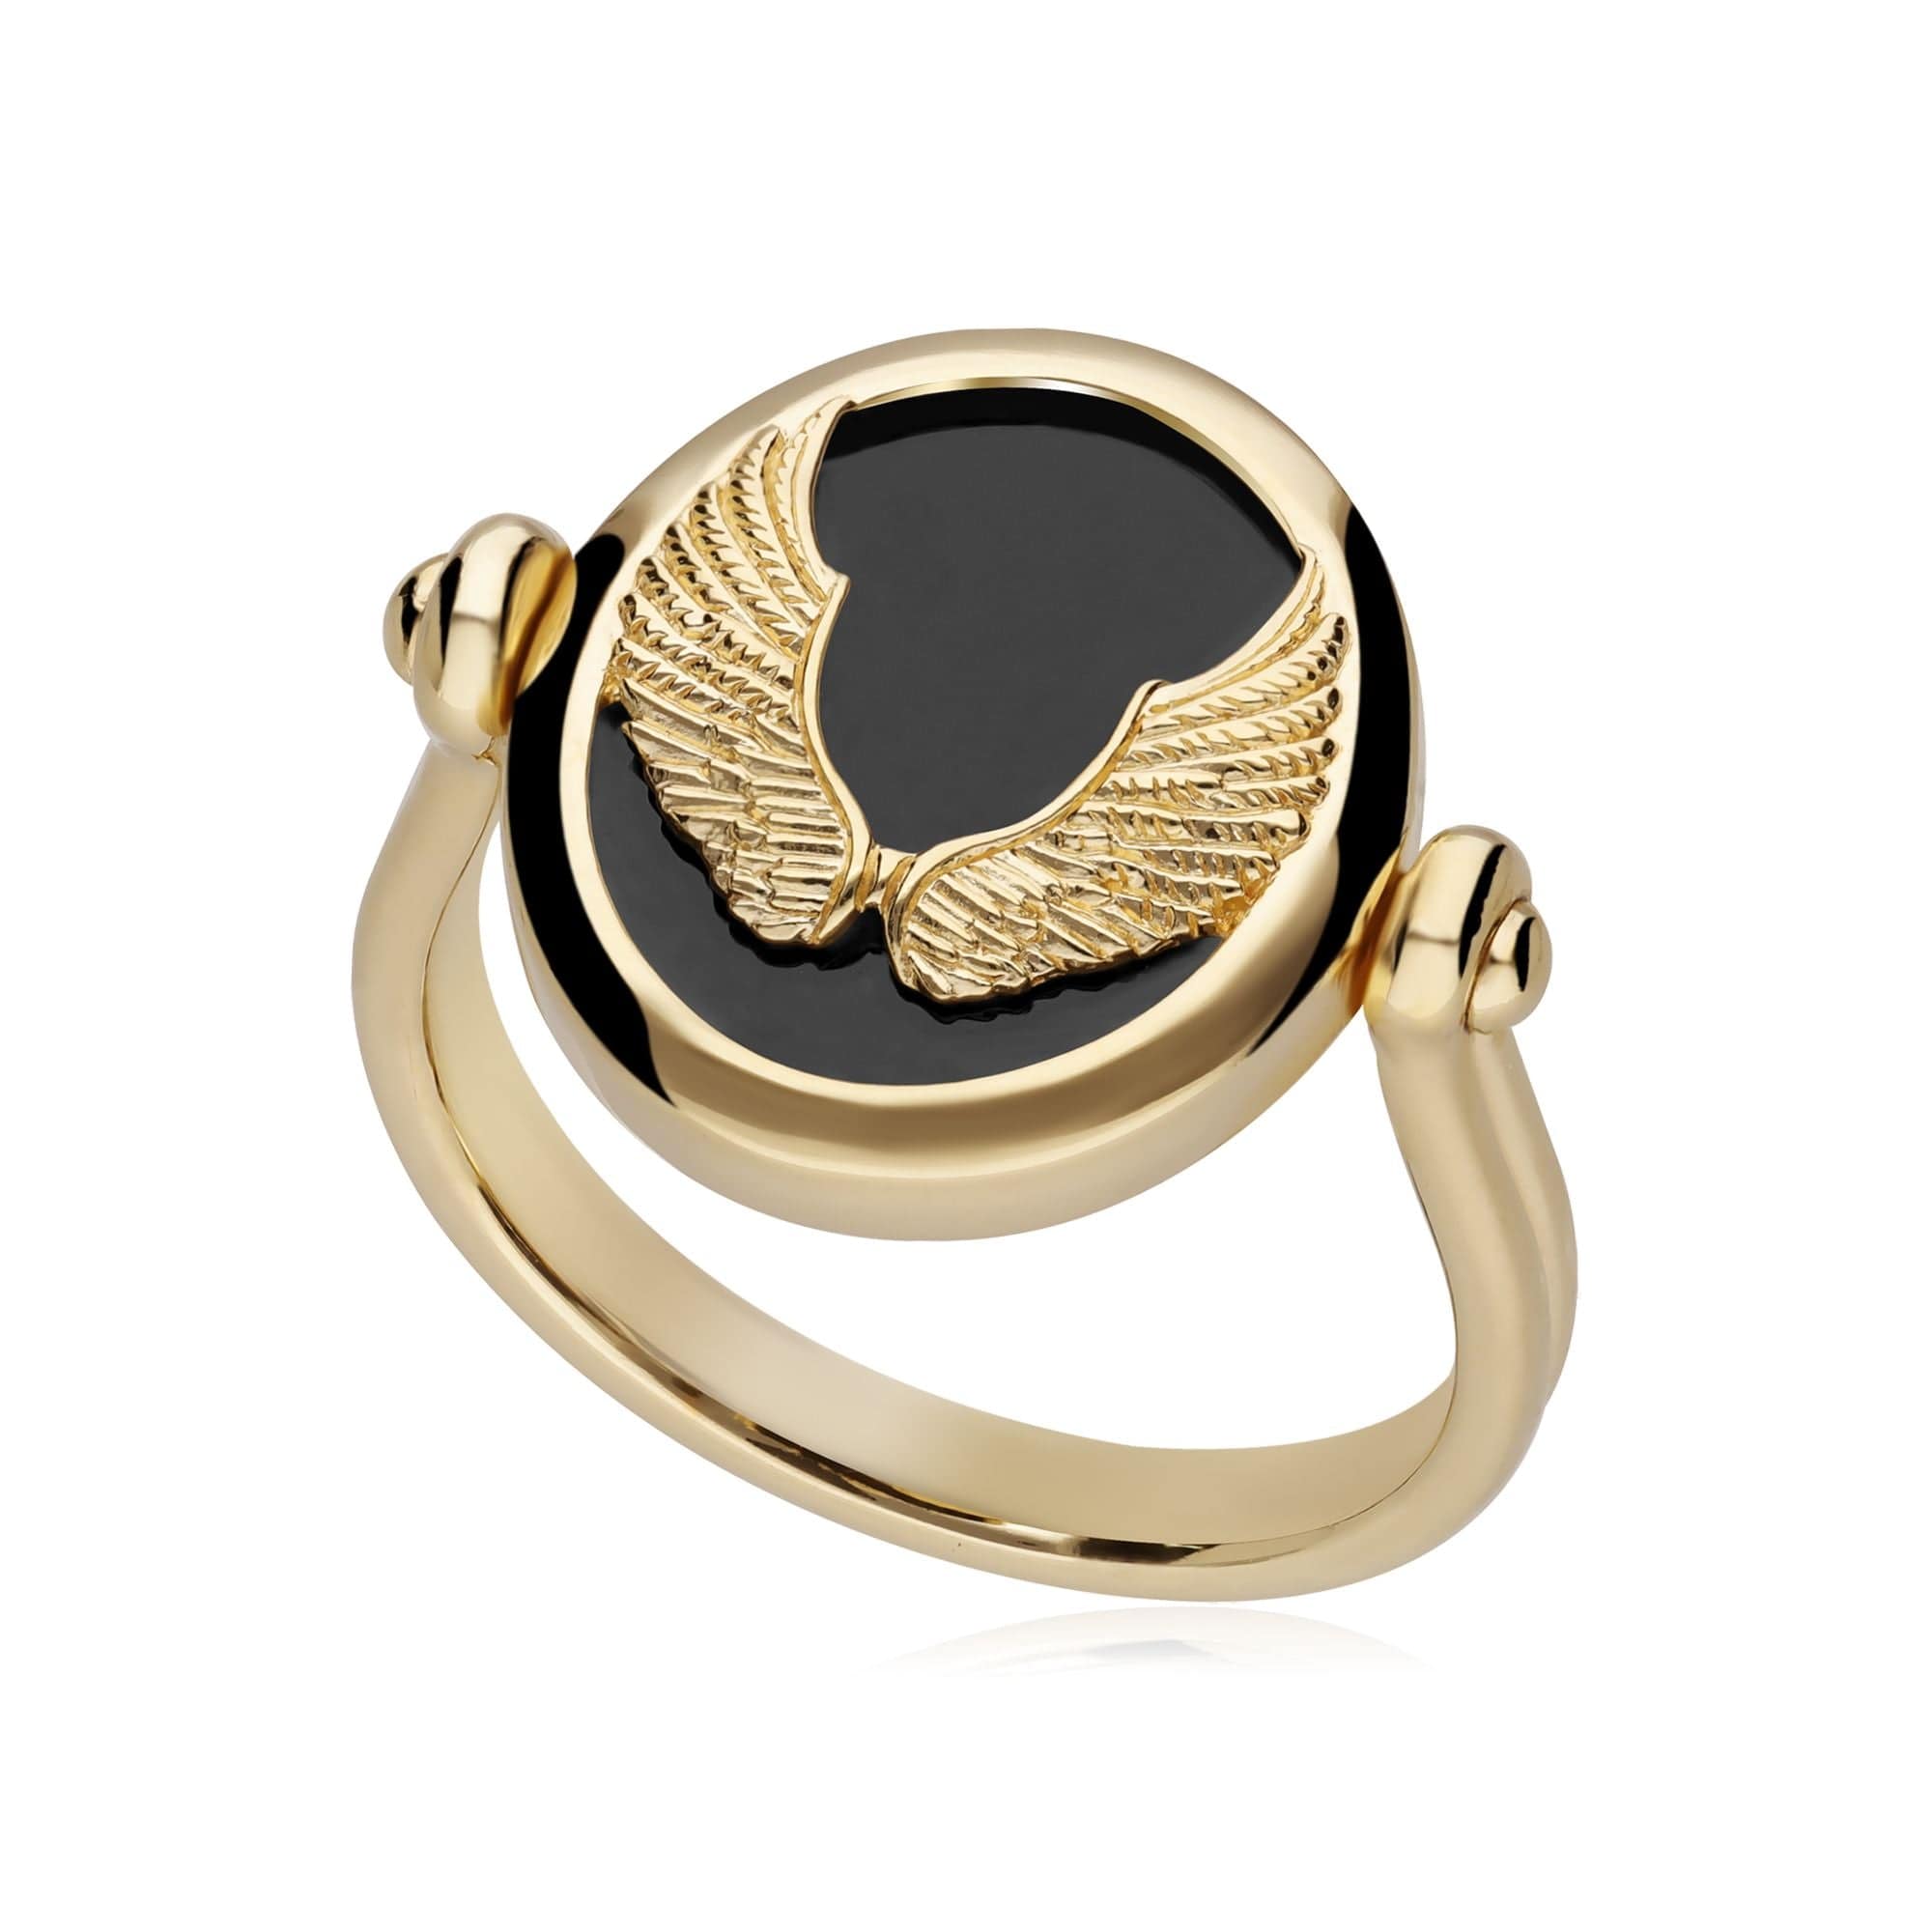 Zodiac Black Onyx Virgo Flip Ring in 18ct Gold Plated Silver - Gemondo